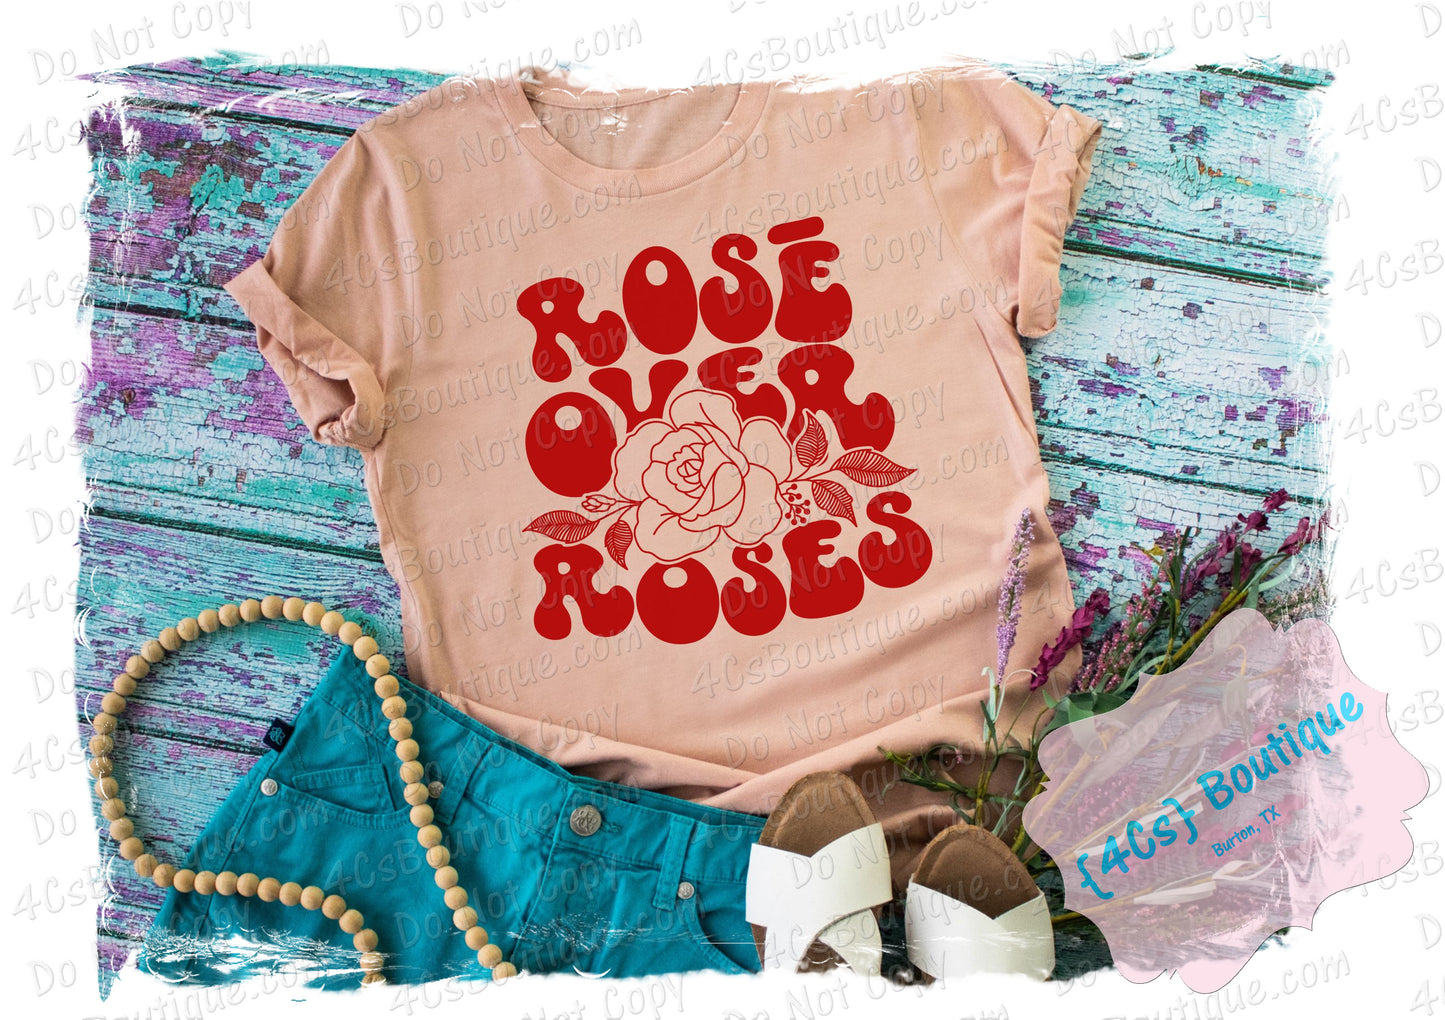 Rosè over Roses Shirt